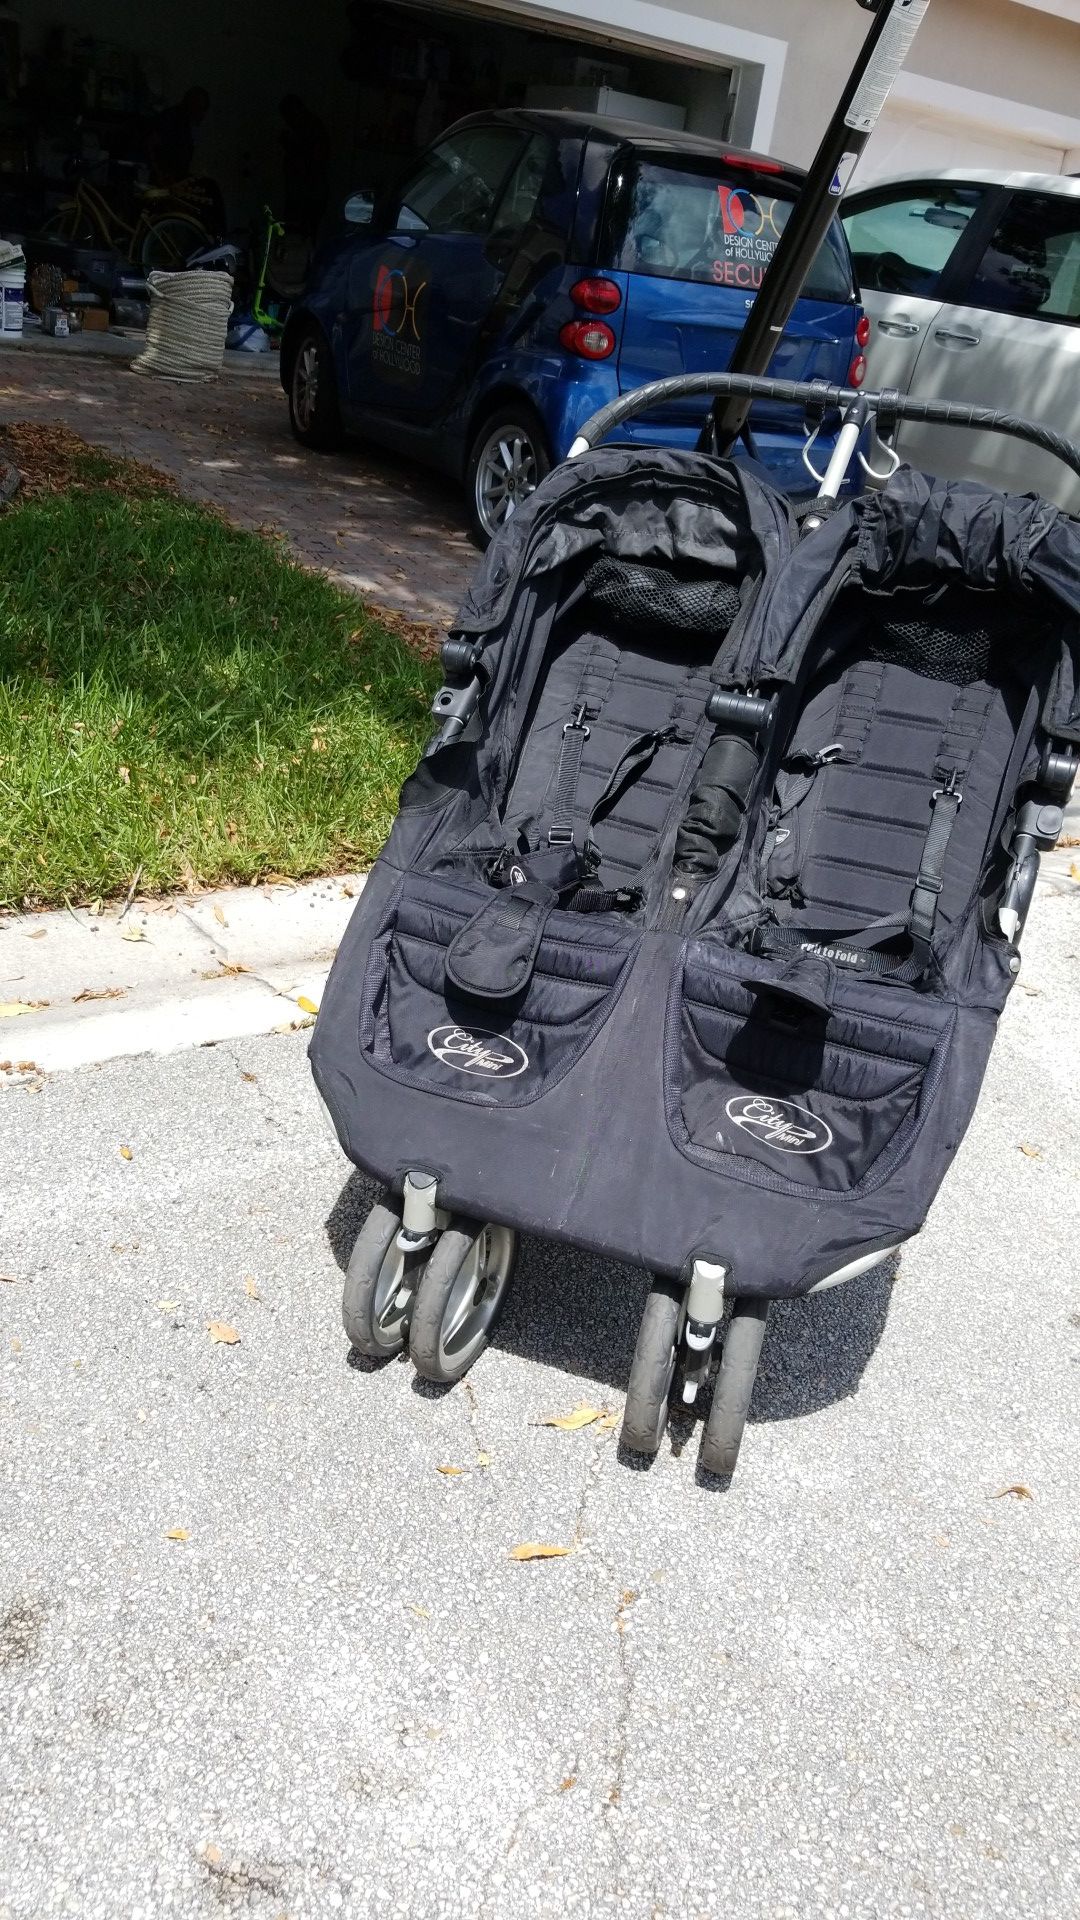 City mini double stroller